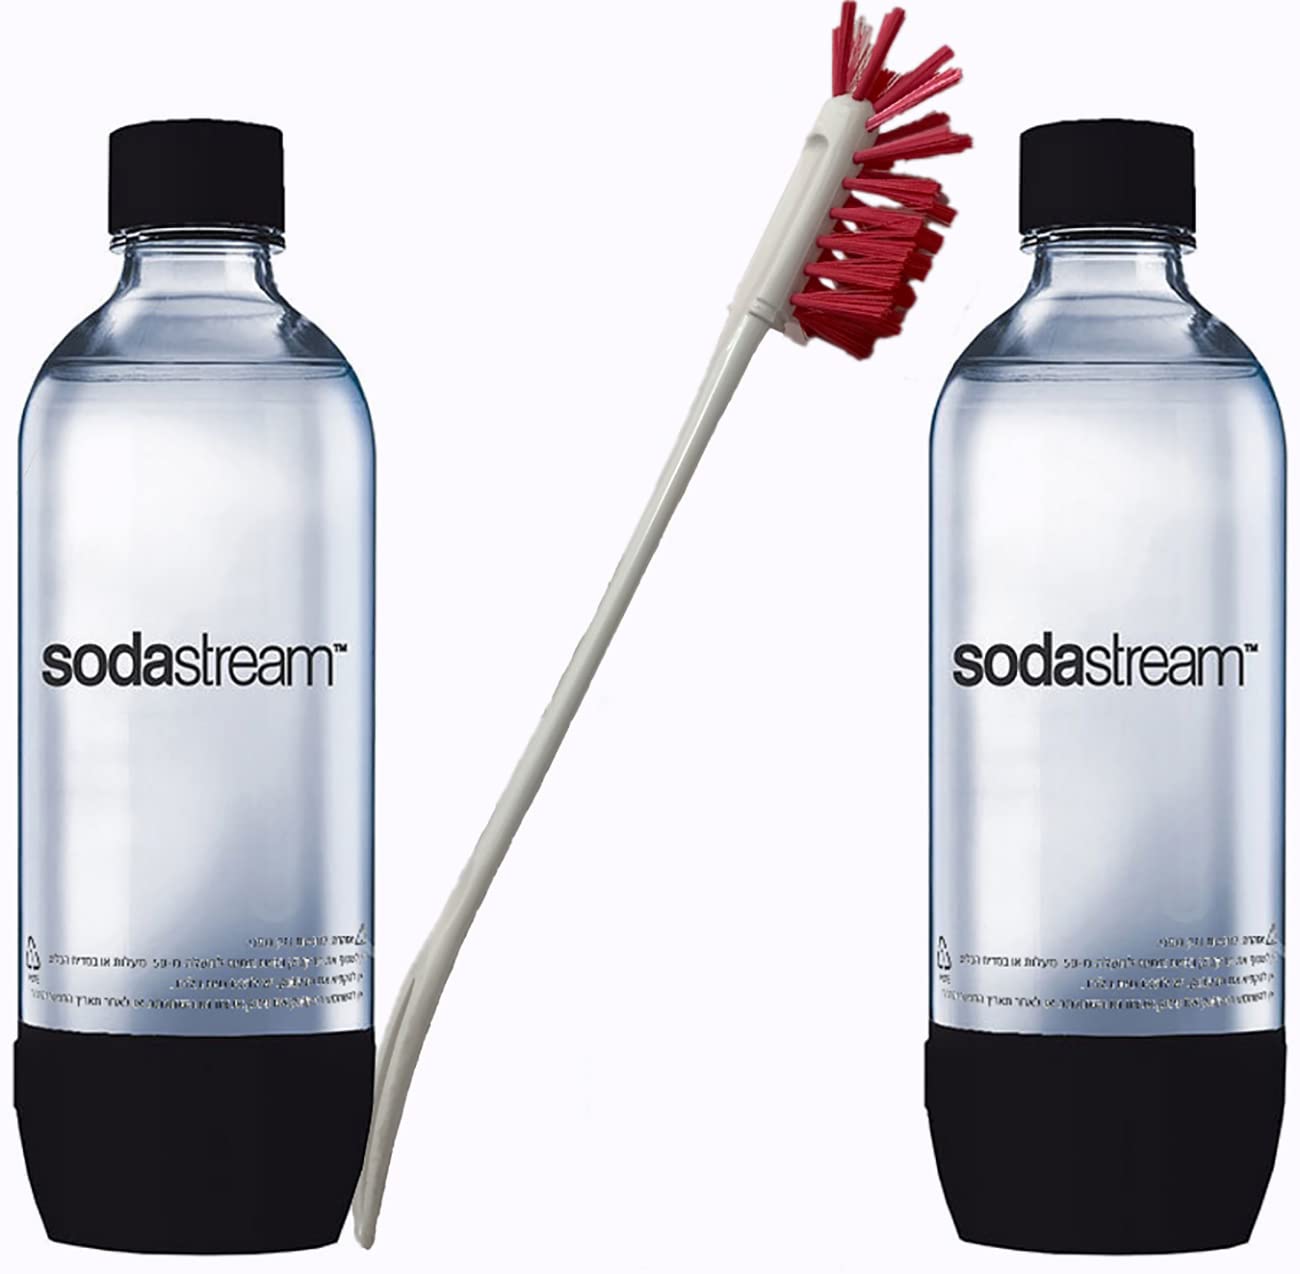 Soda Stream 3 Pack Original Sodastream Reusable Sparkling Water Carbonating  Bottles 1L 1 Liter Bundle with Kidscare 14 inch Bottle Cleaning Brush